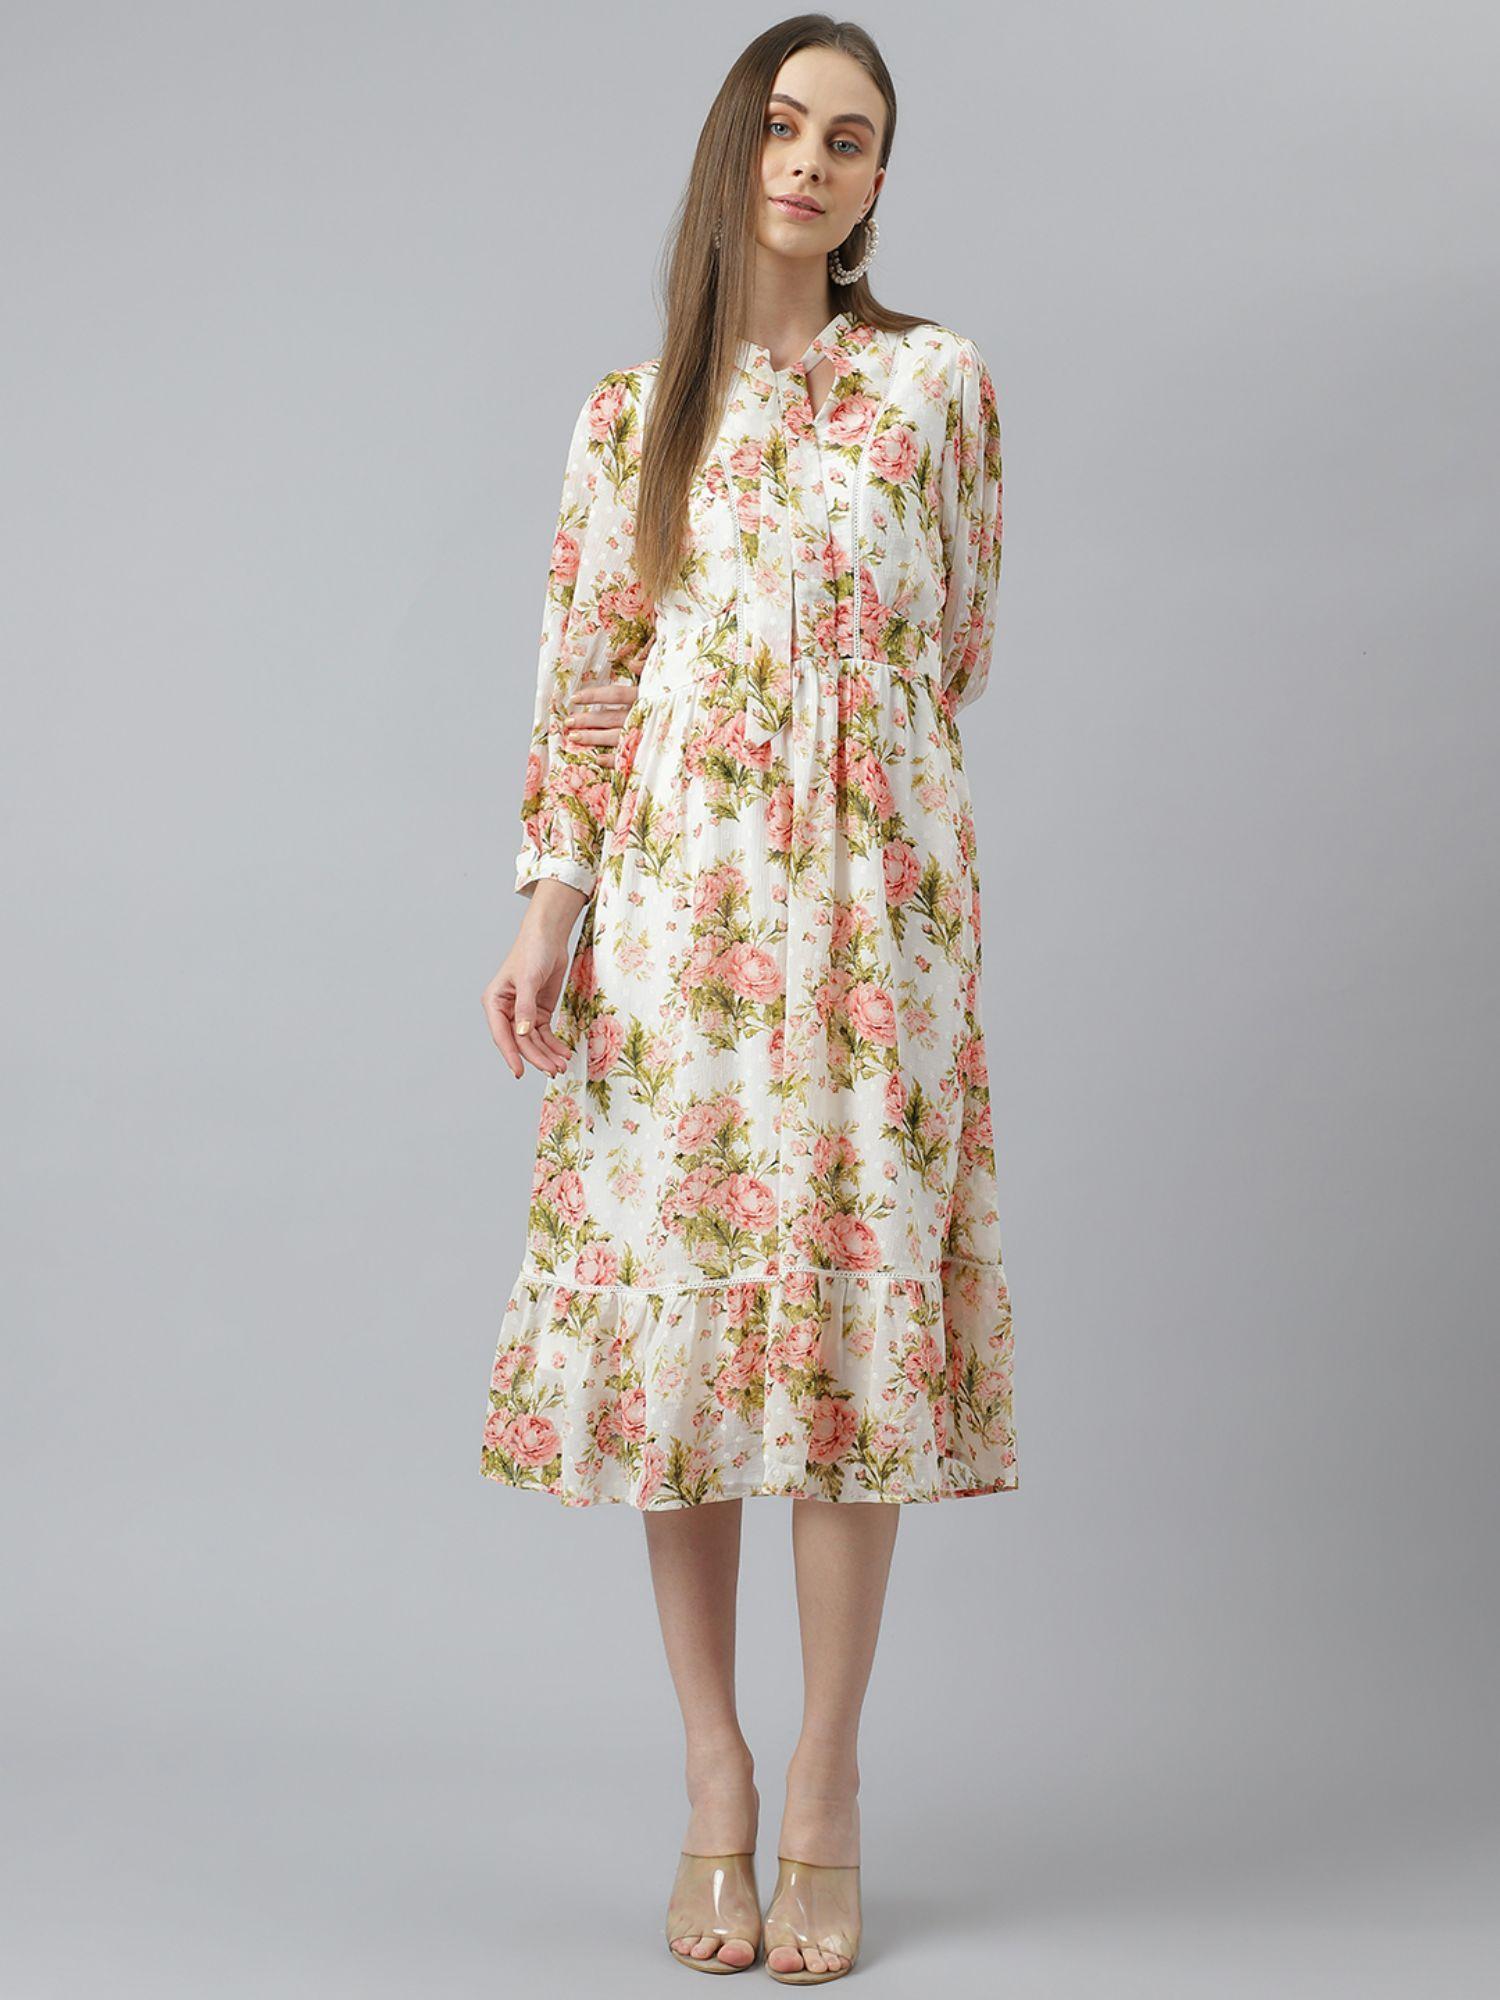 midi length floral print dress